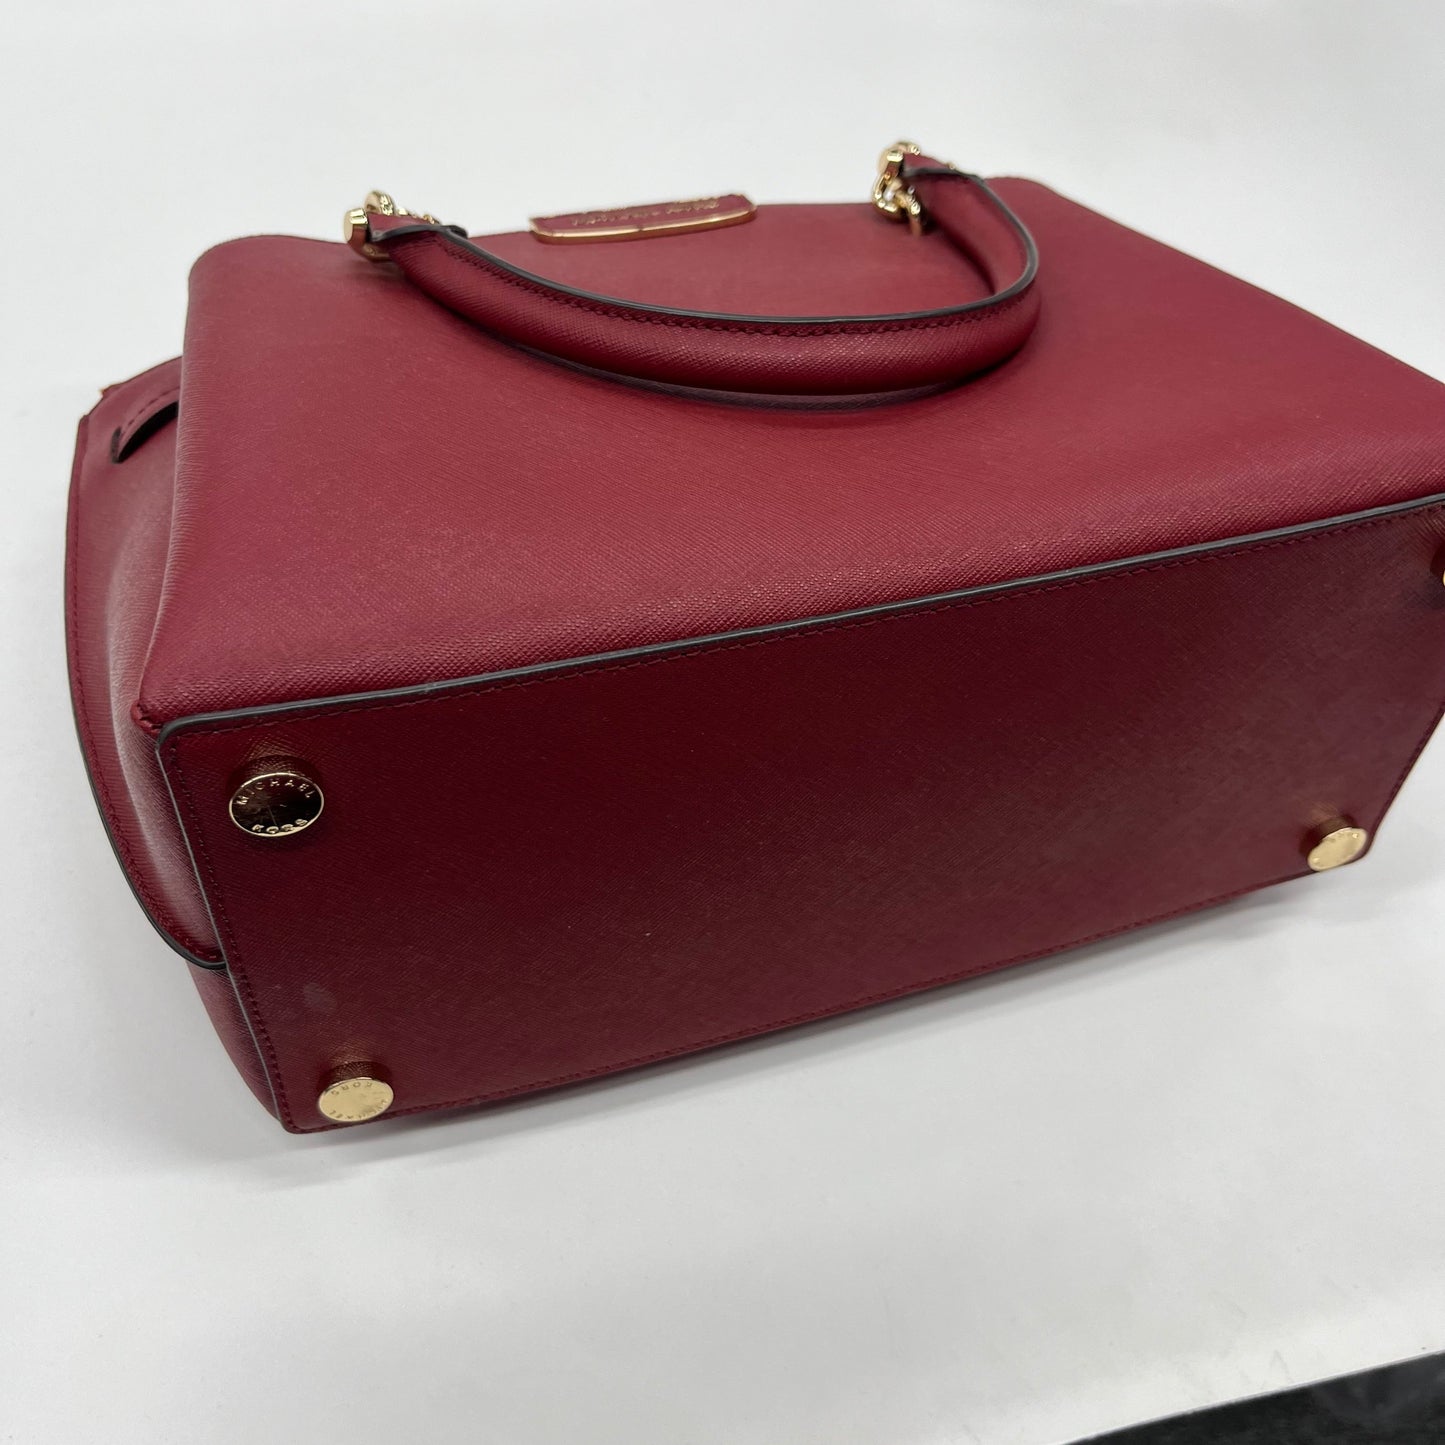 Handbag Designer Michael Kors NWT, Size Medium